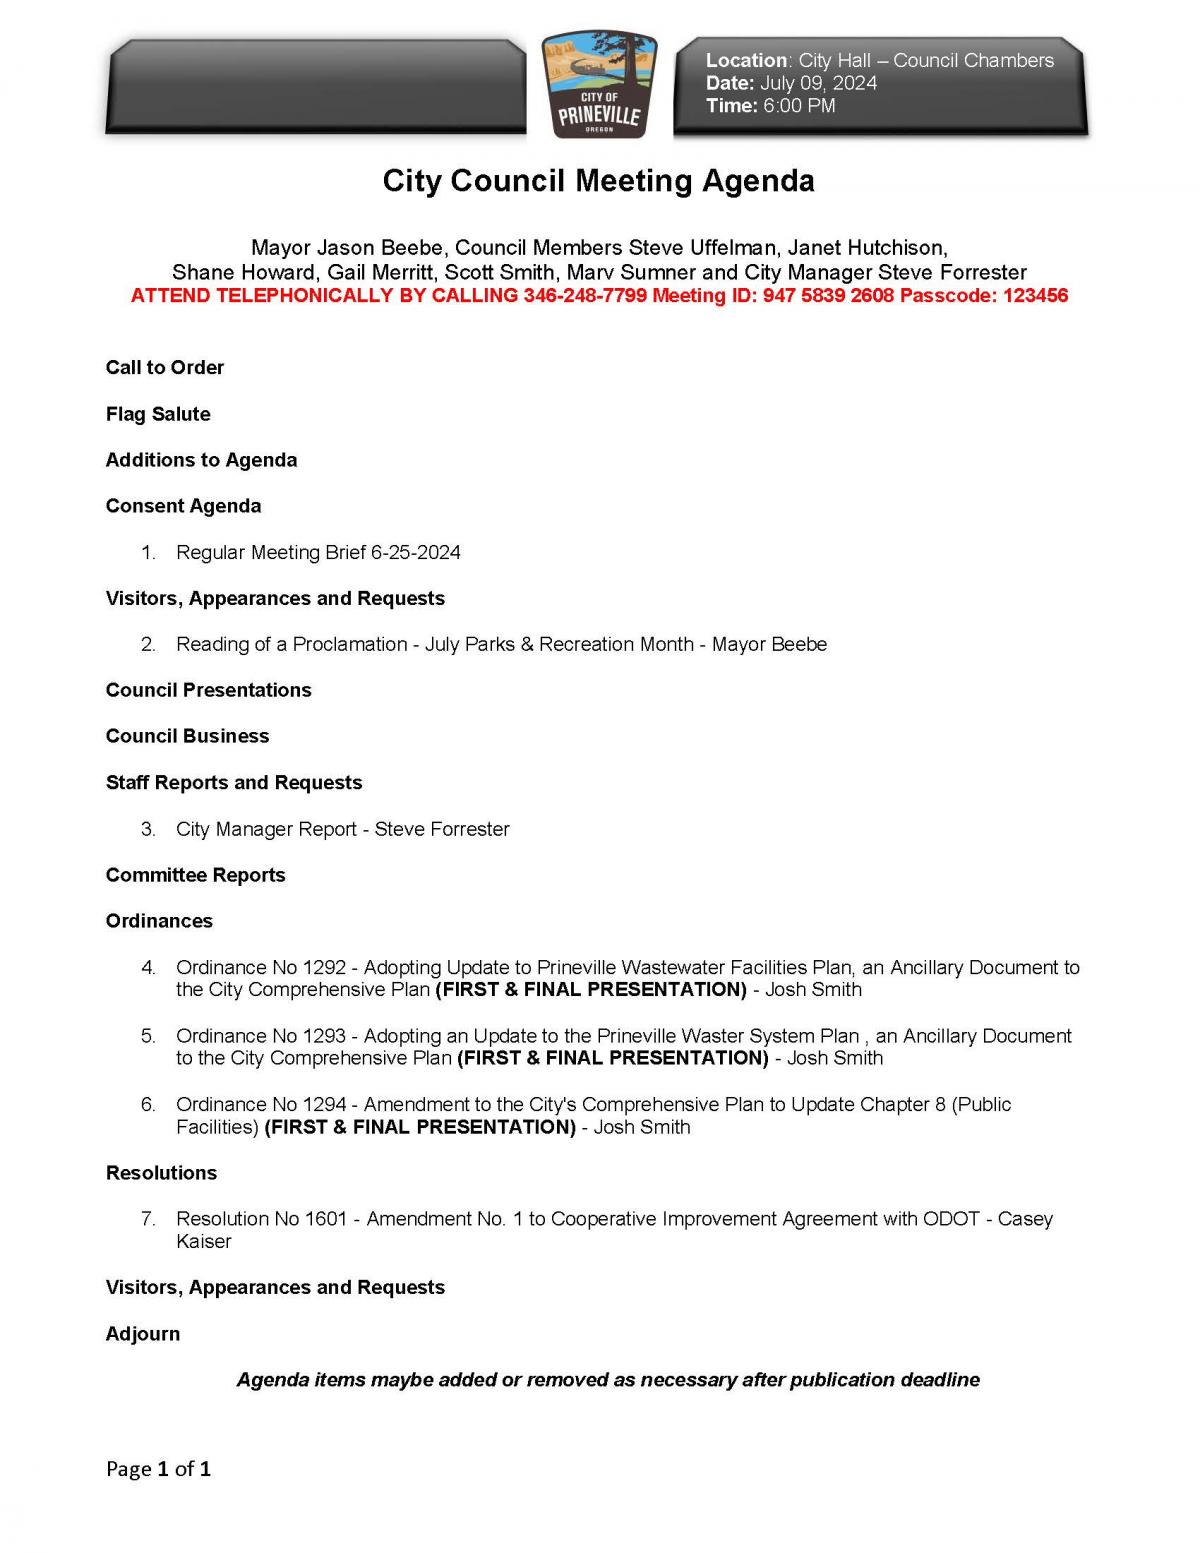 Council Agenda 7-9-2024